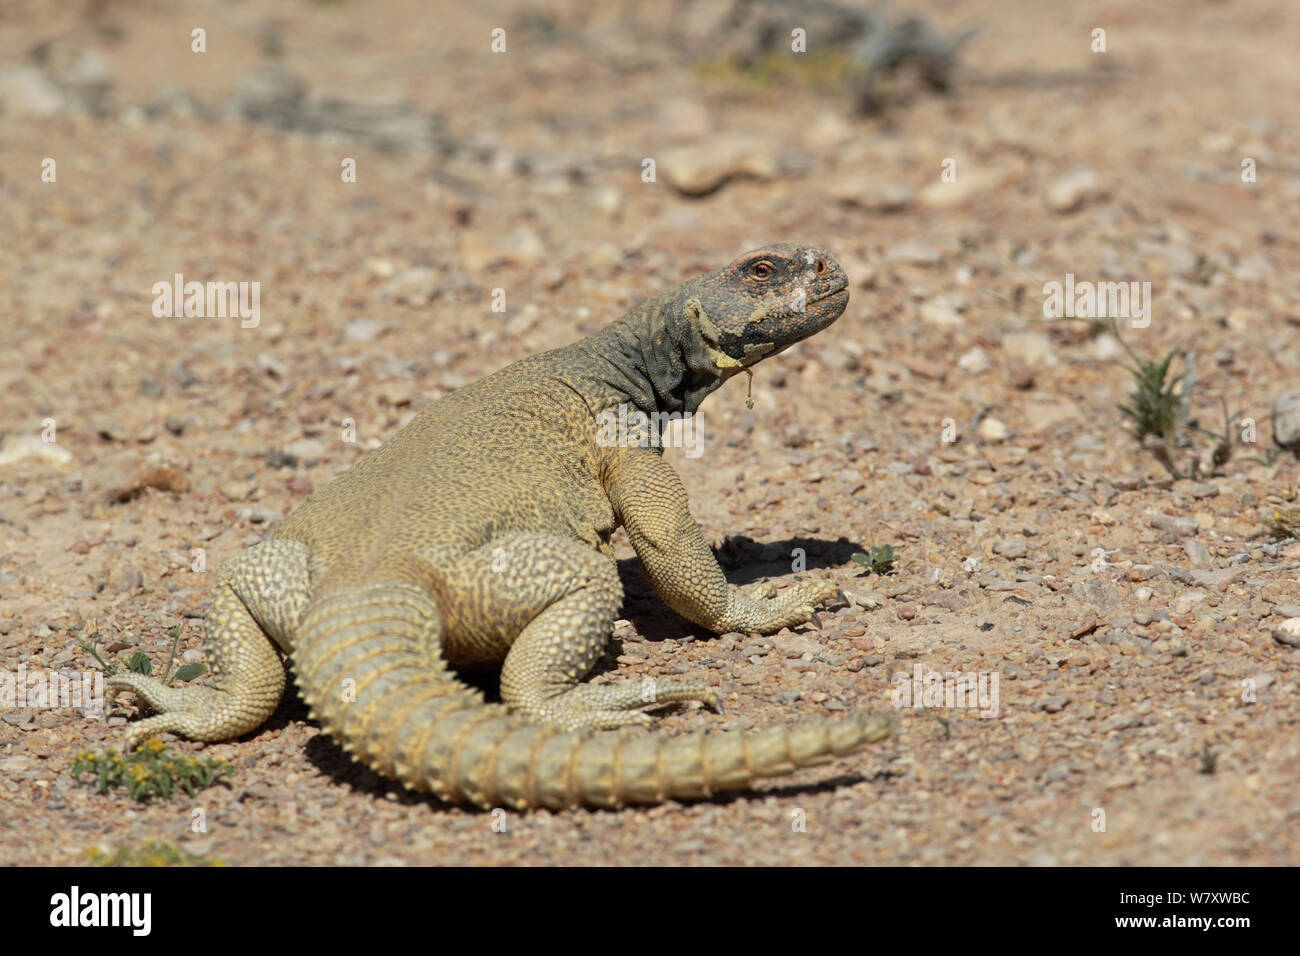 Spiny tailed lizard (Uromastyx aegyptia microlepis) Oman, January Stock Photo